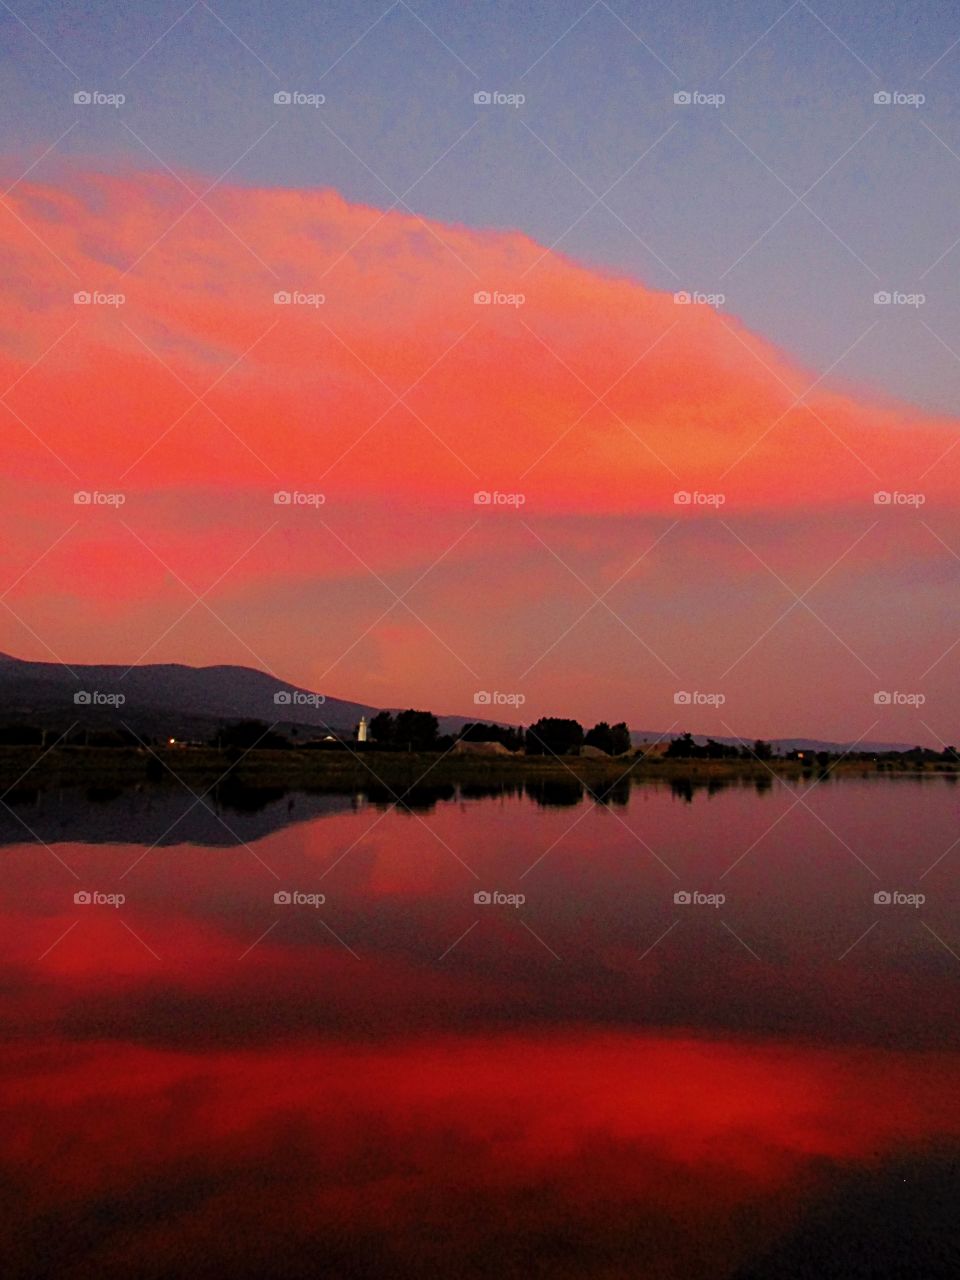 Sunset, lake and reflection